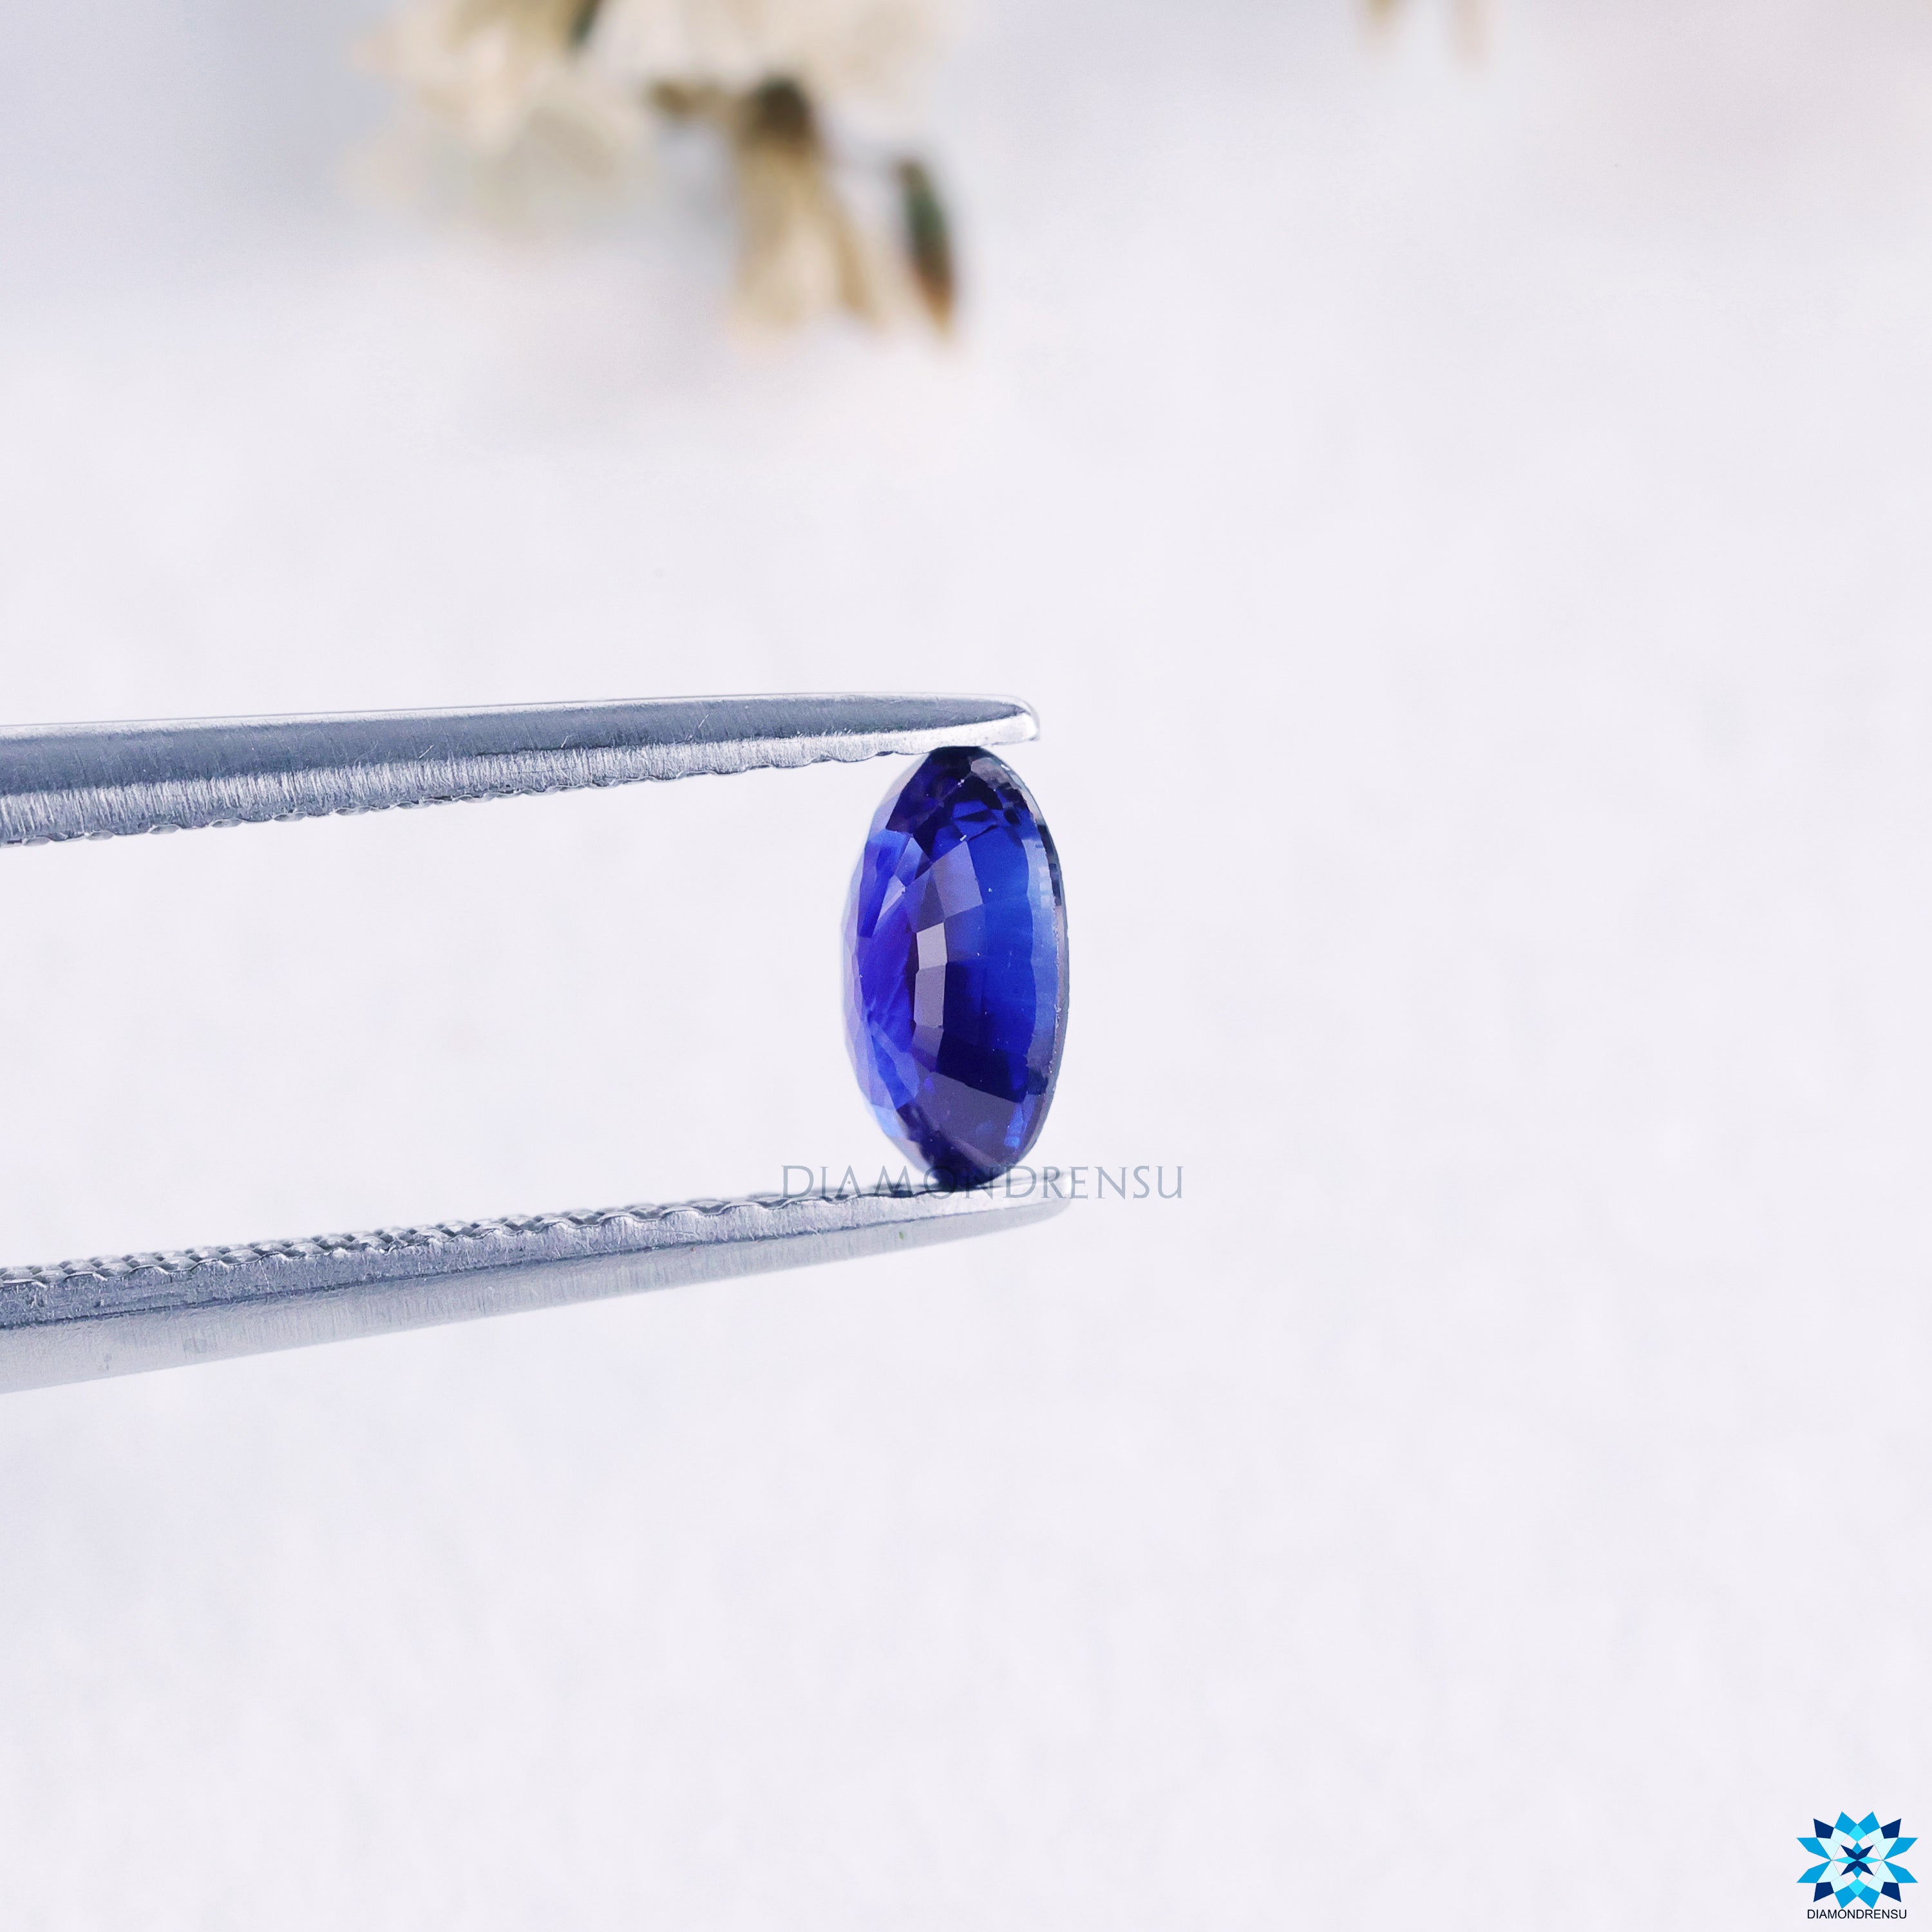 blue sapphire - diamondrensu